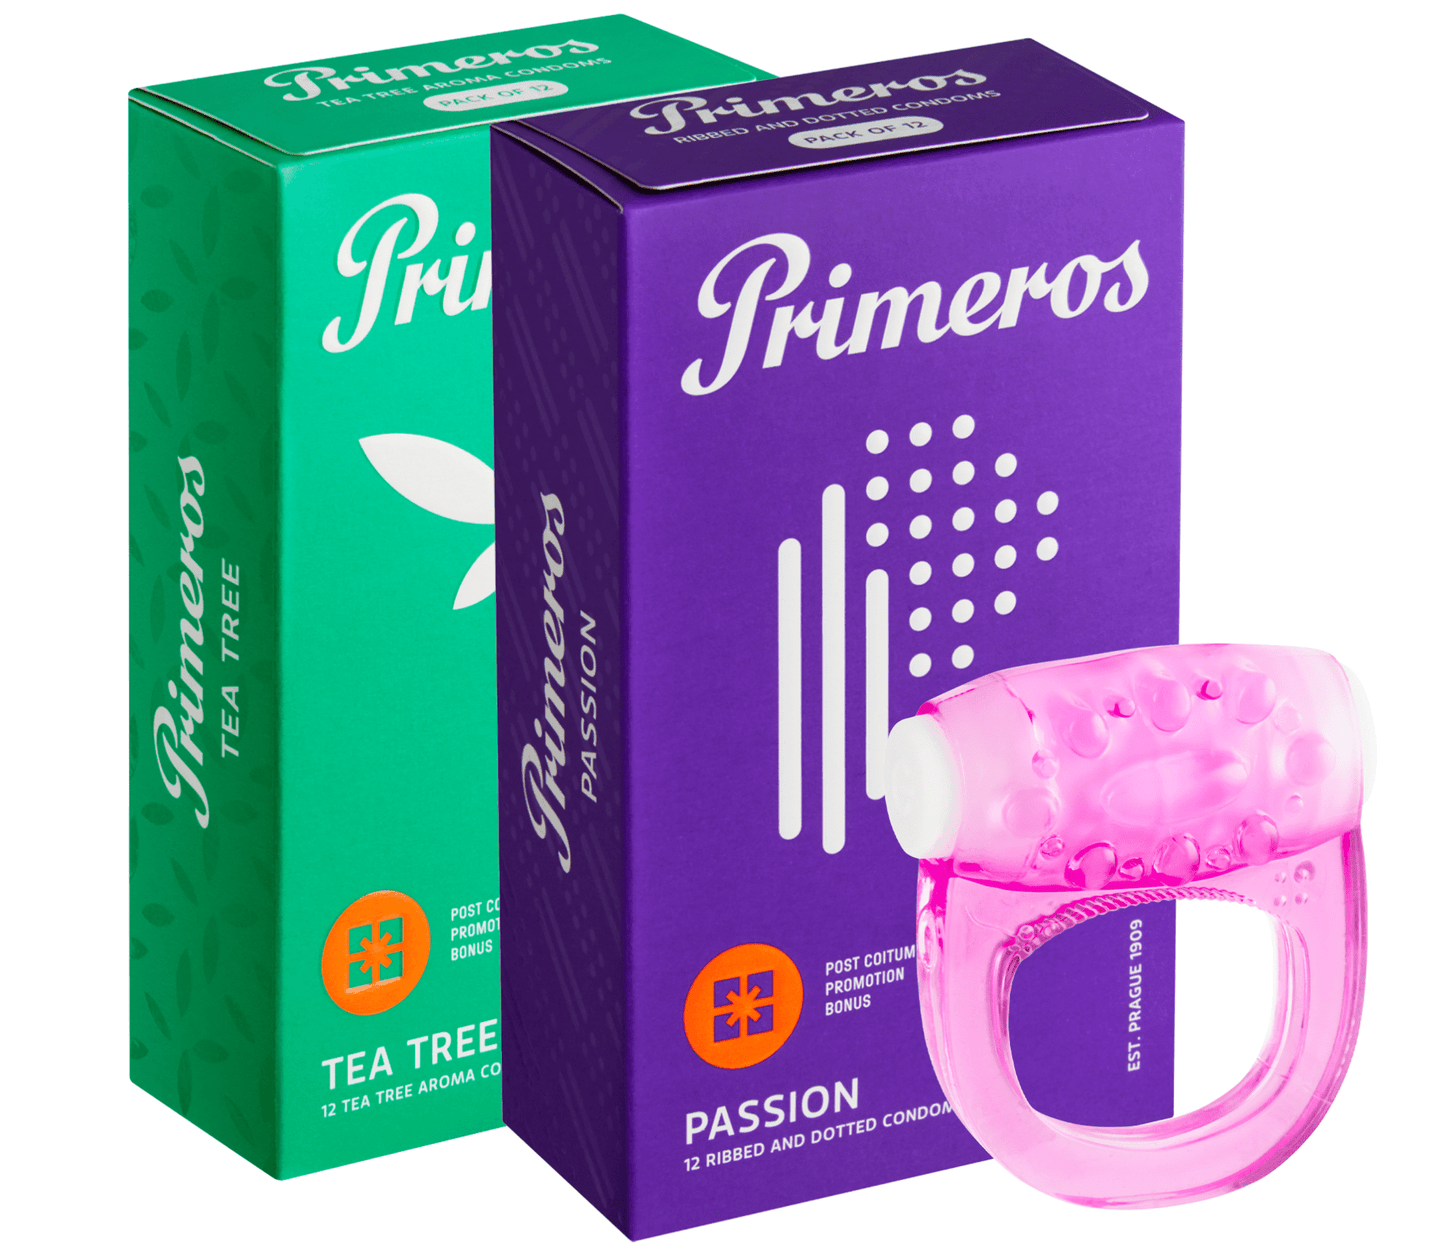 Primeros kondomy Tea Tree, kondomy Passion a vibrační kroužek jako dárek zdarma